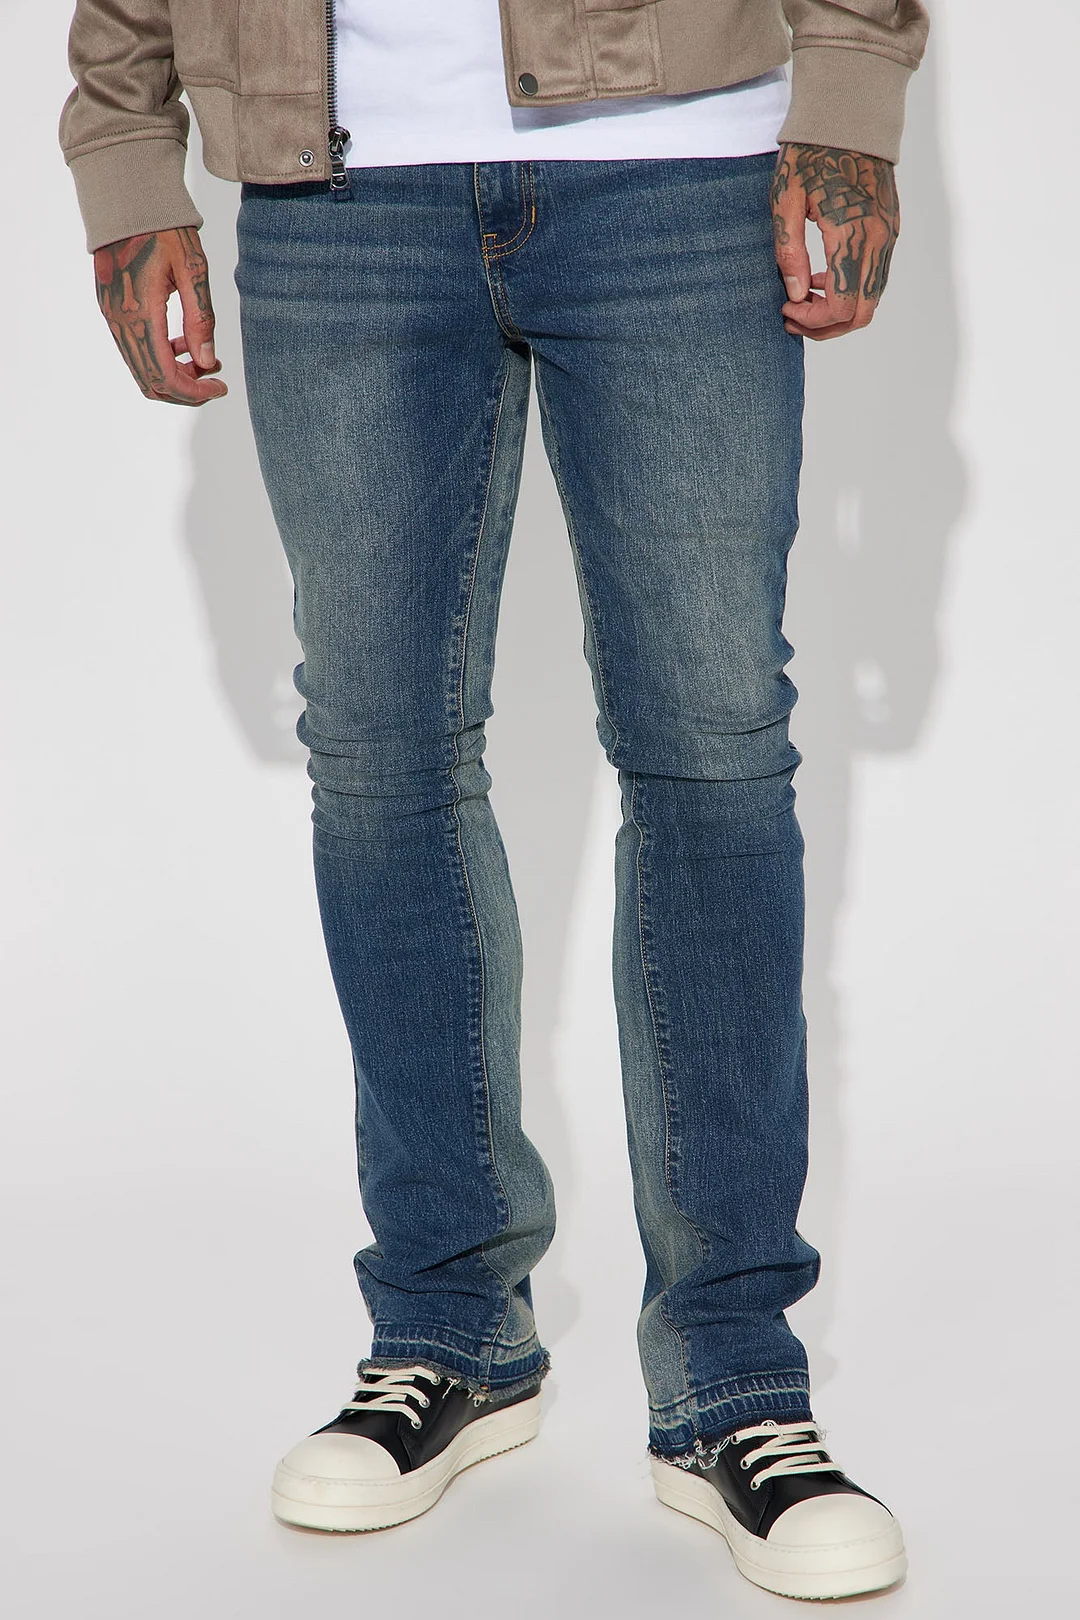 Low Key Skinny Stacked Flare Jeans - Vintage Blue Wash